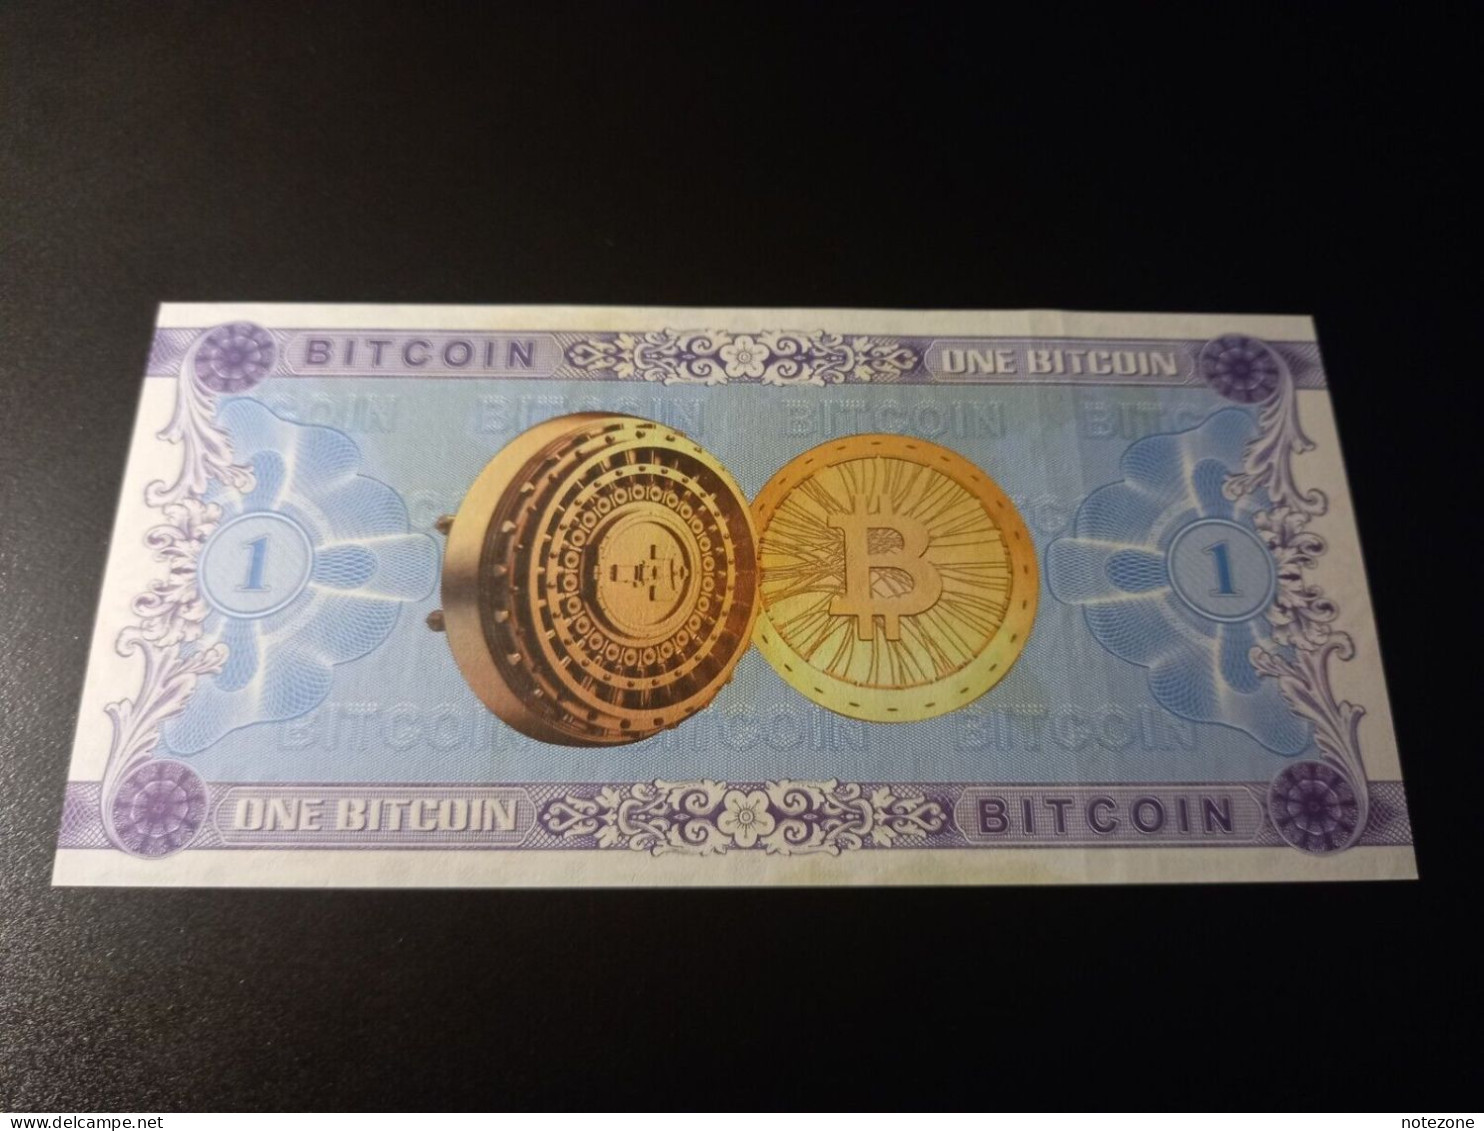 BTC Bitcoin Cryptocurrency Crypto Paper Fantasy Private Note Banknote - Sammlungen & Sammellose